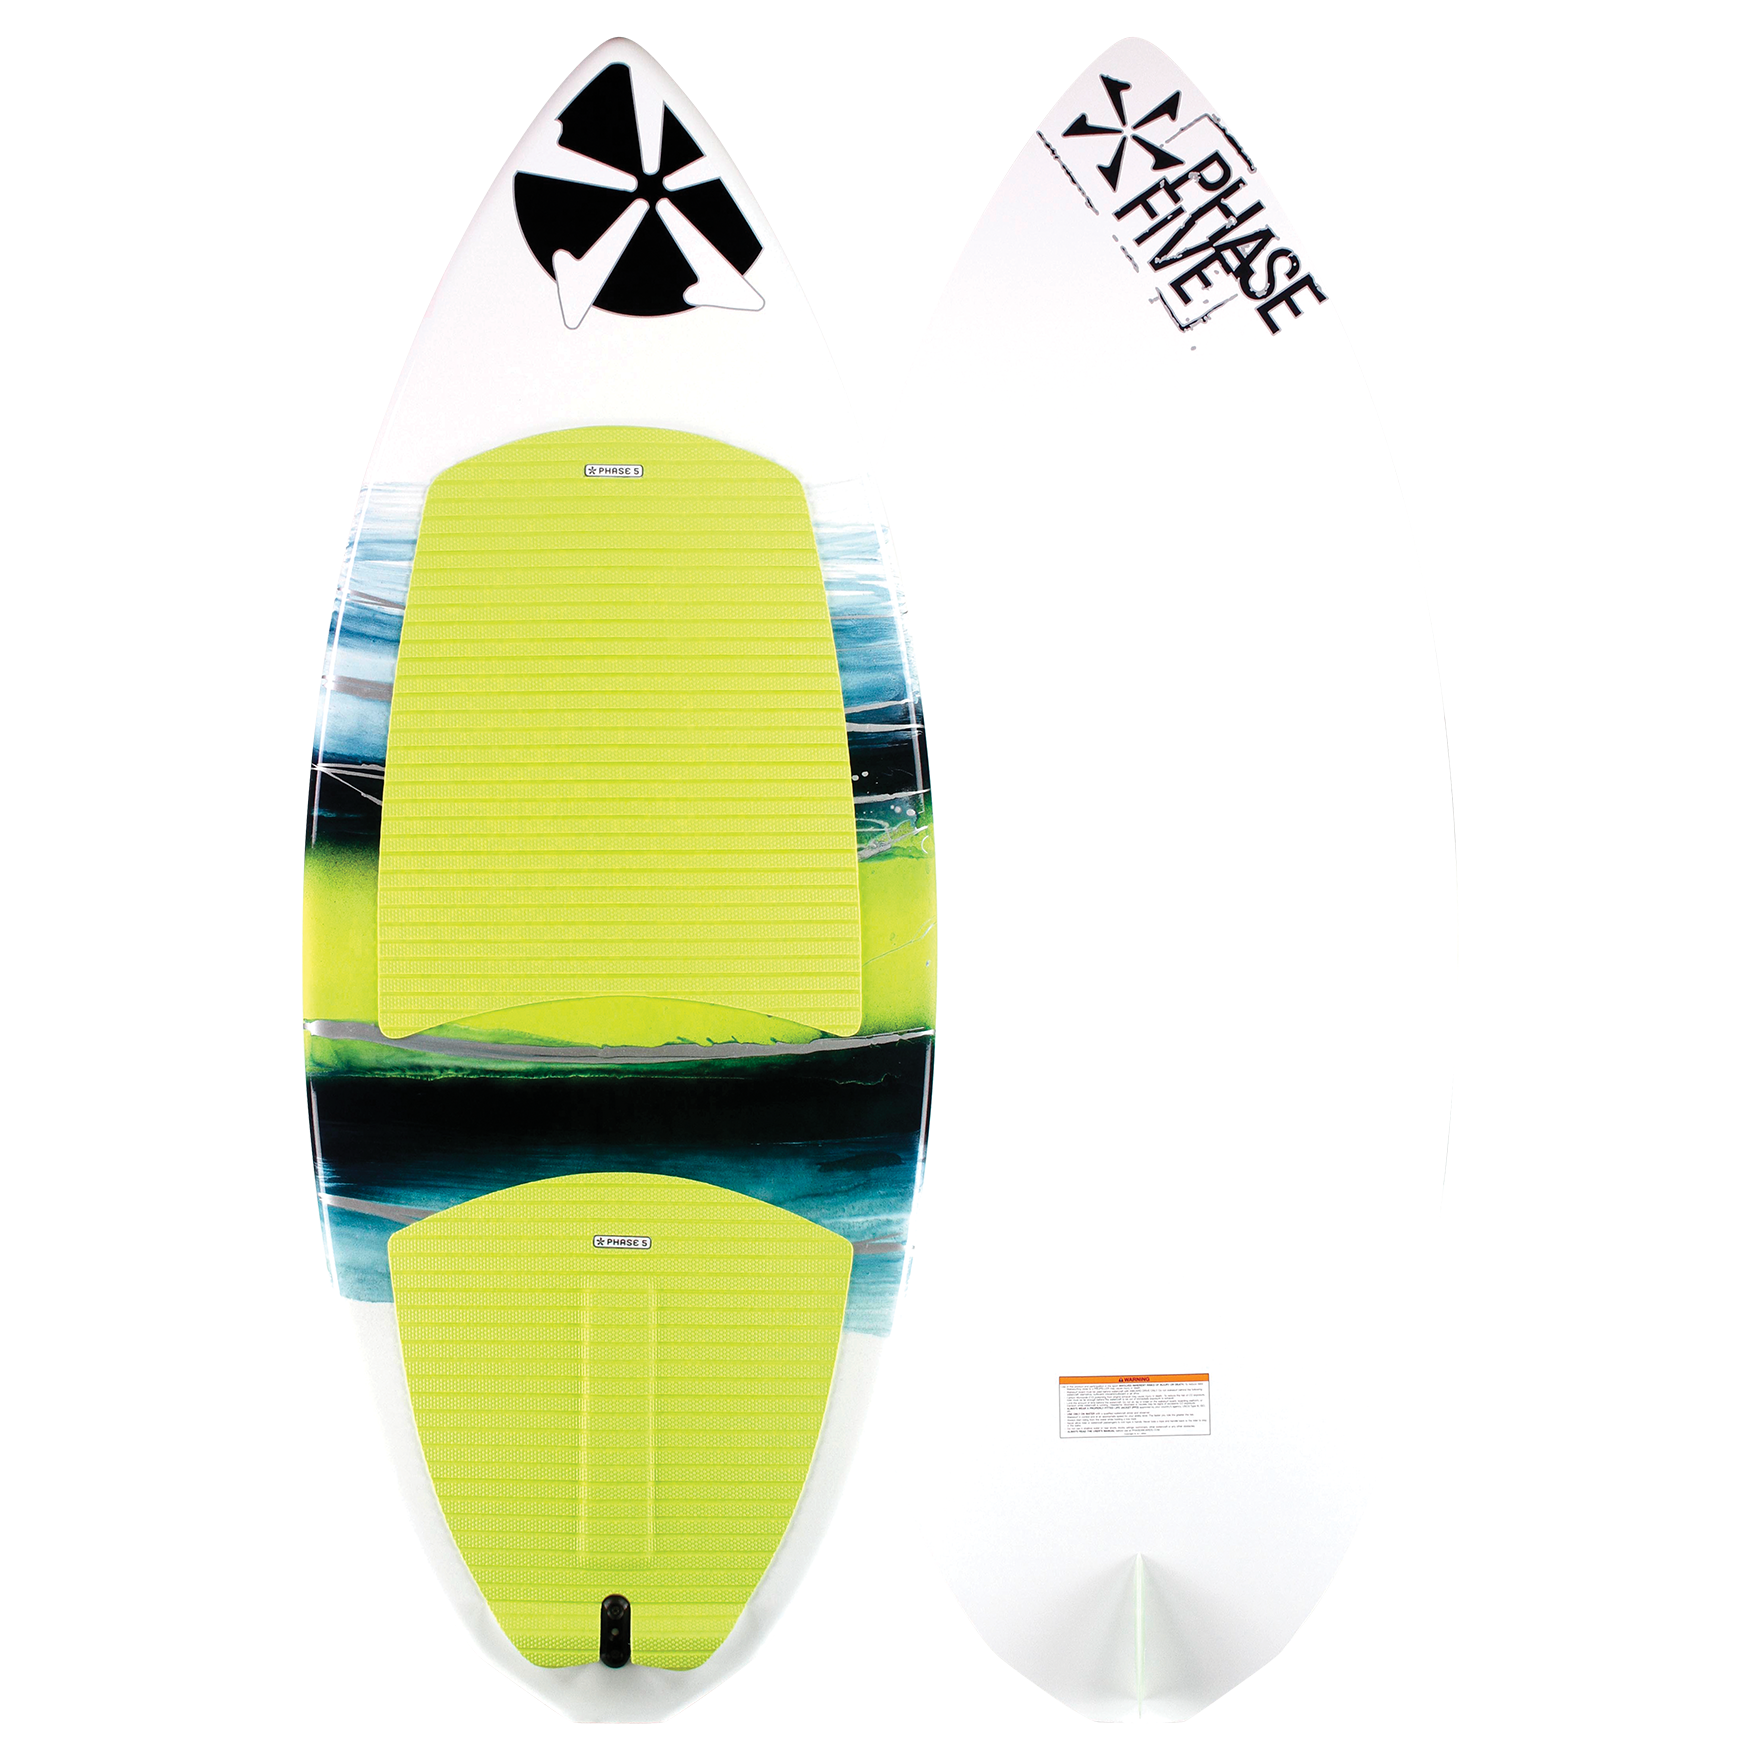 wakesurf board